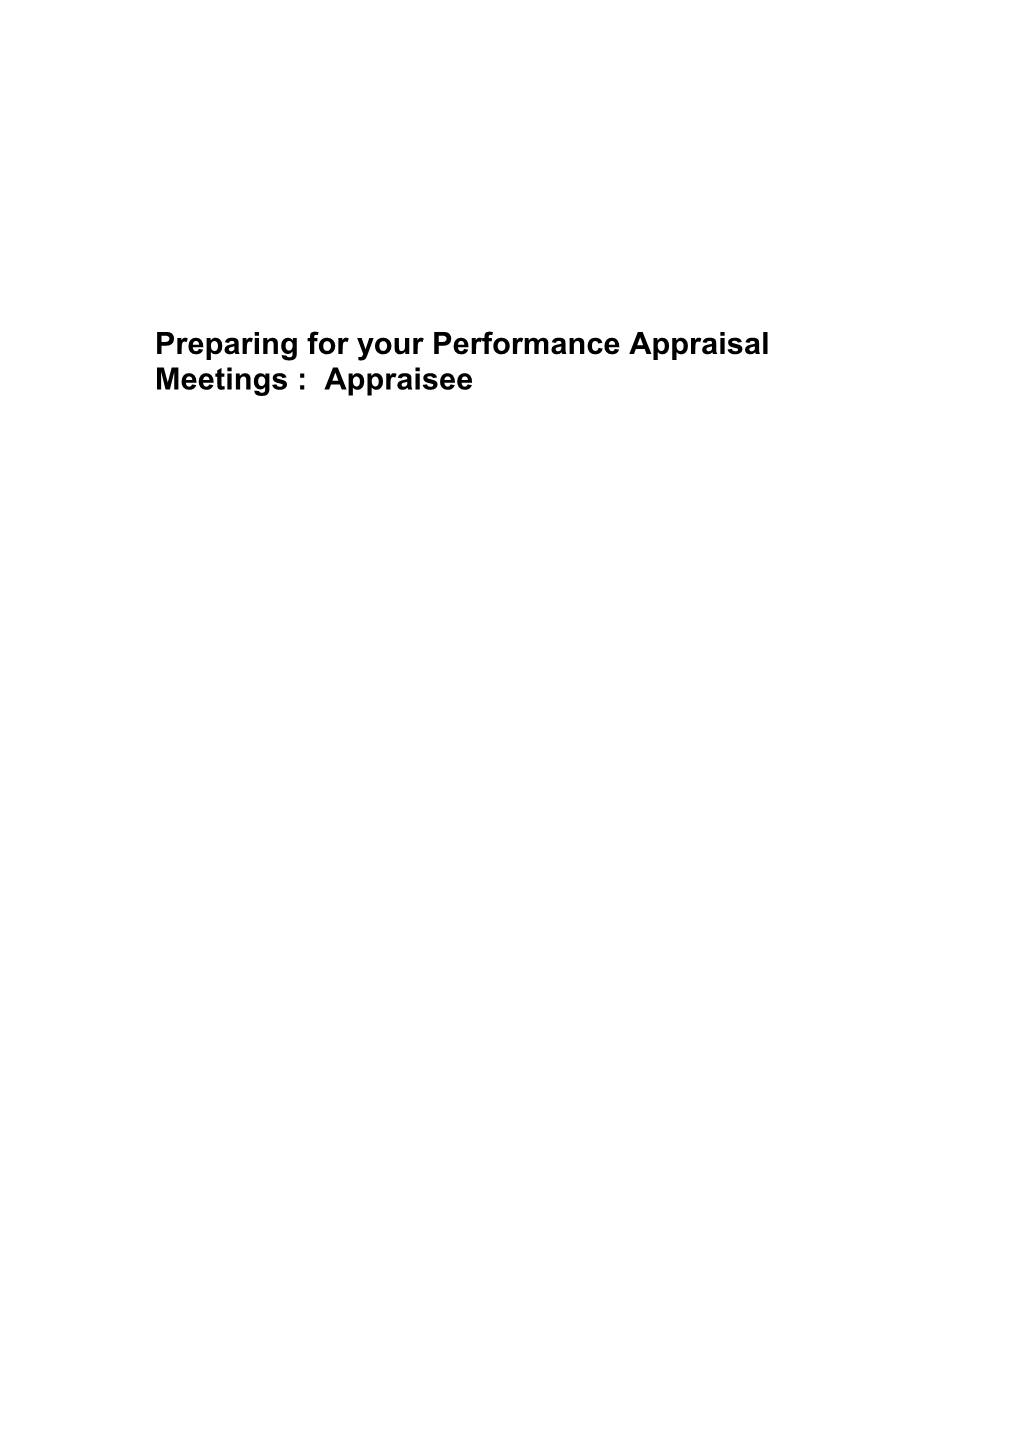 Preparing for Your Performance Appraisal Meetings : Appraisee